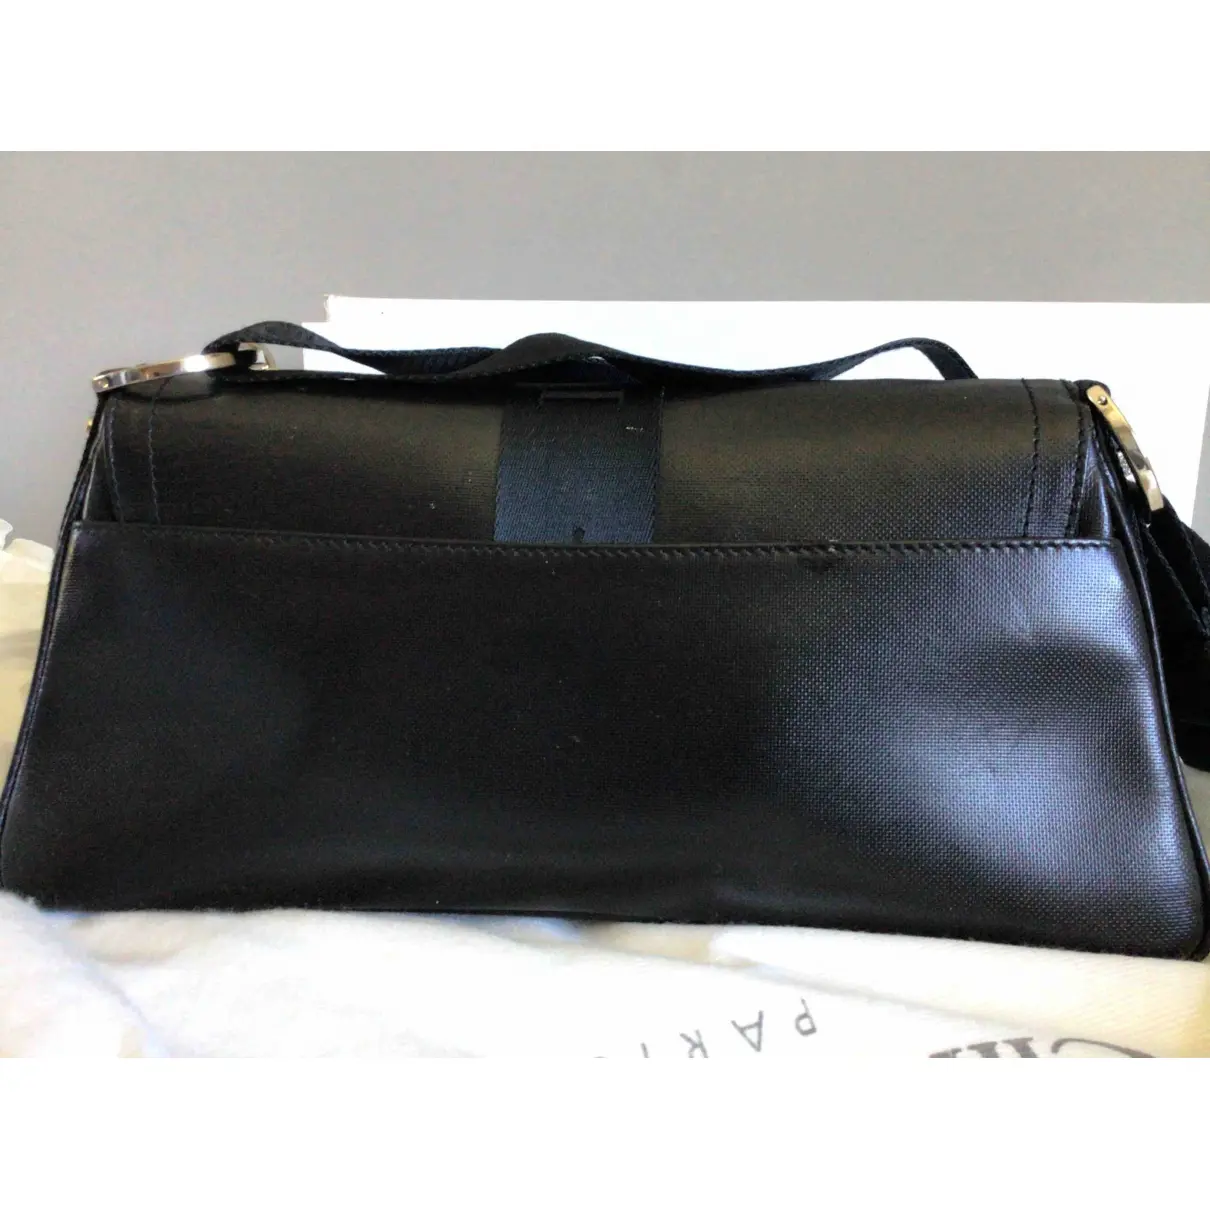 Buy Dior Hardcore leather handbag online